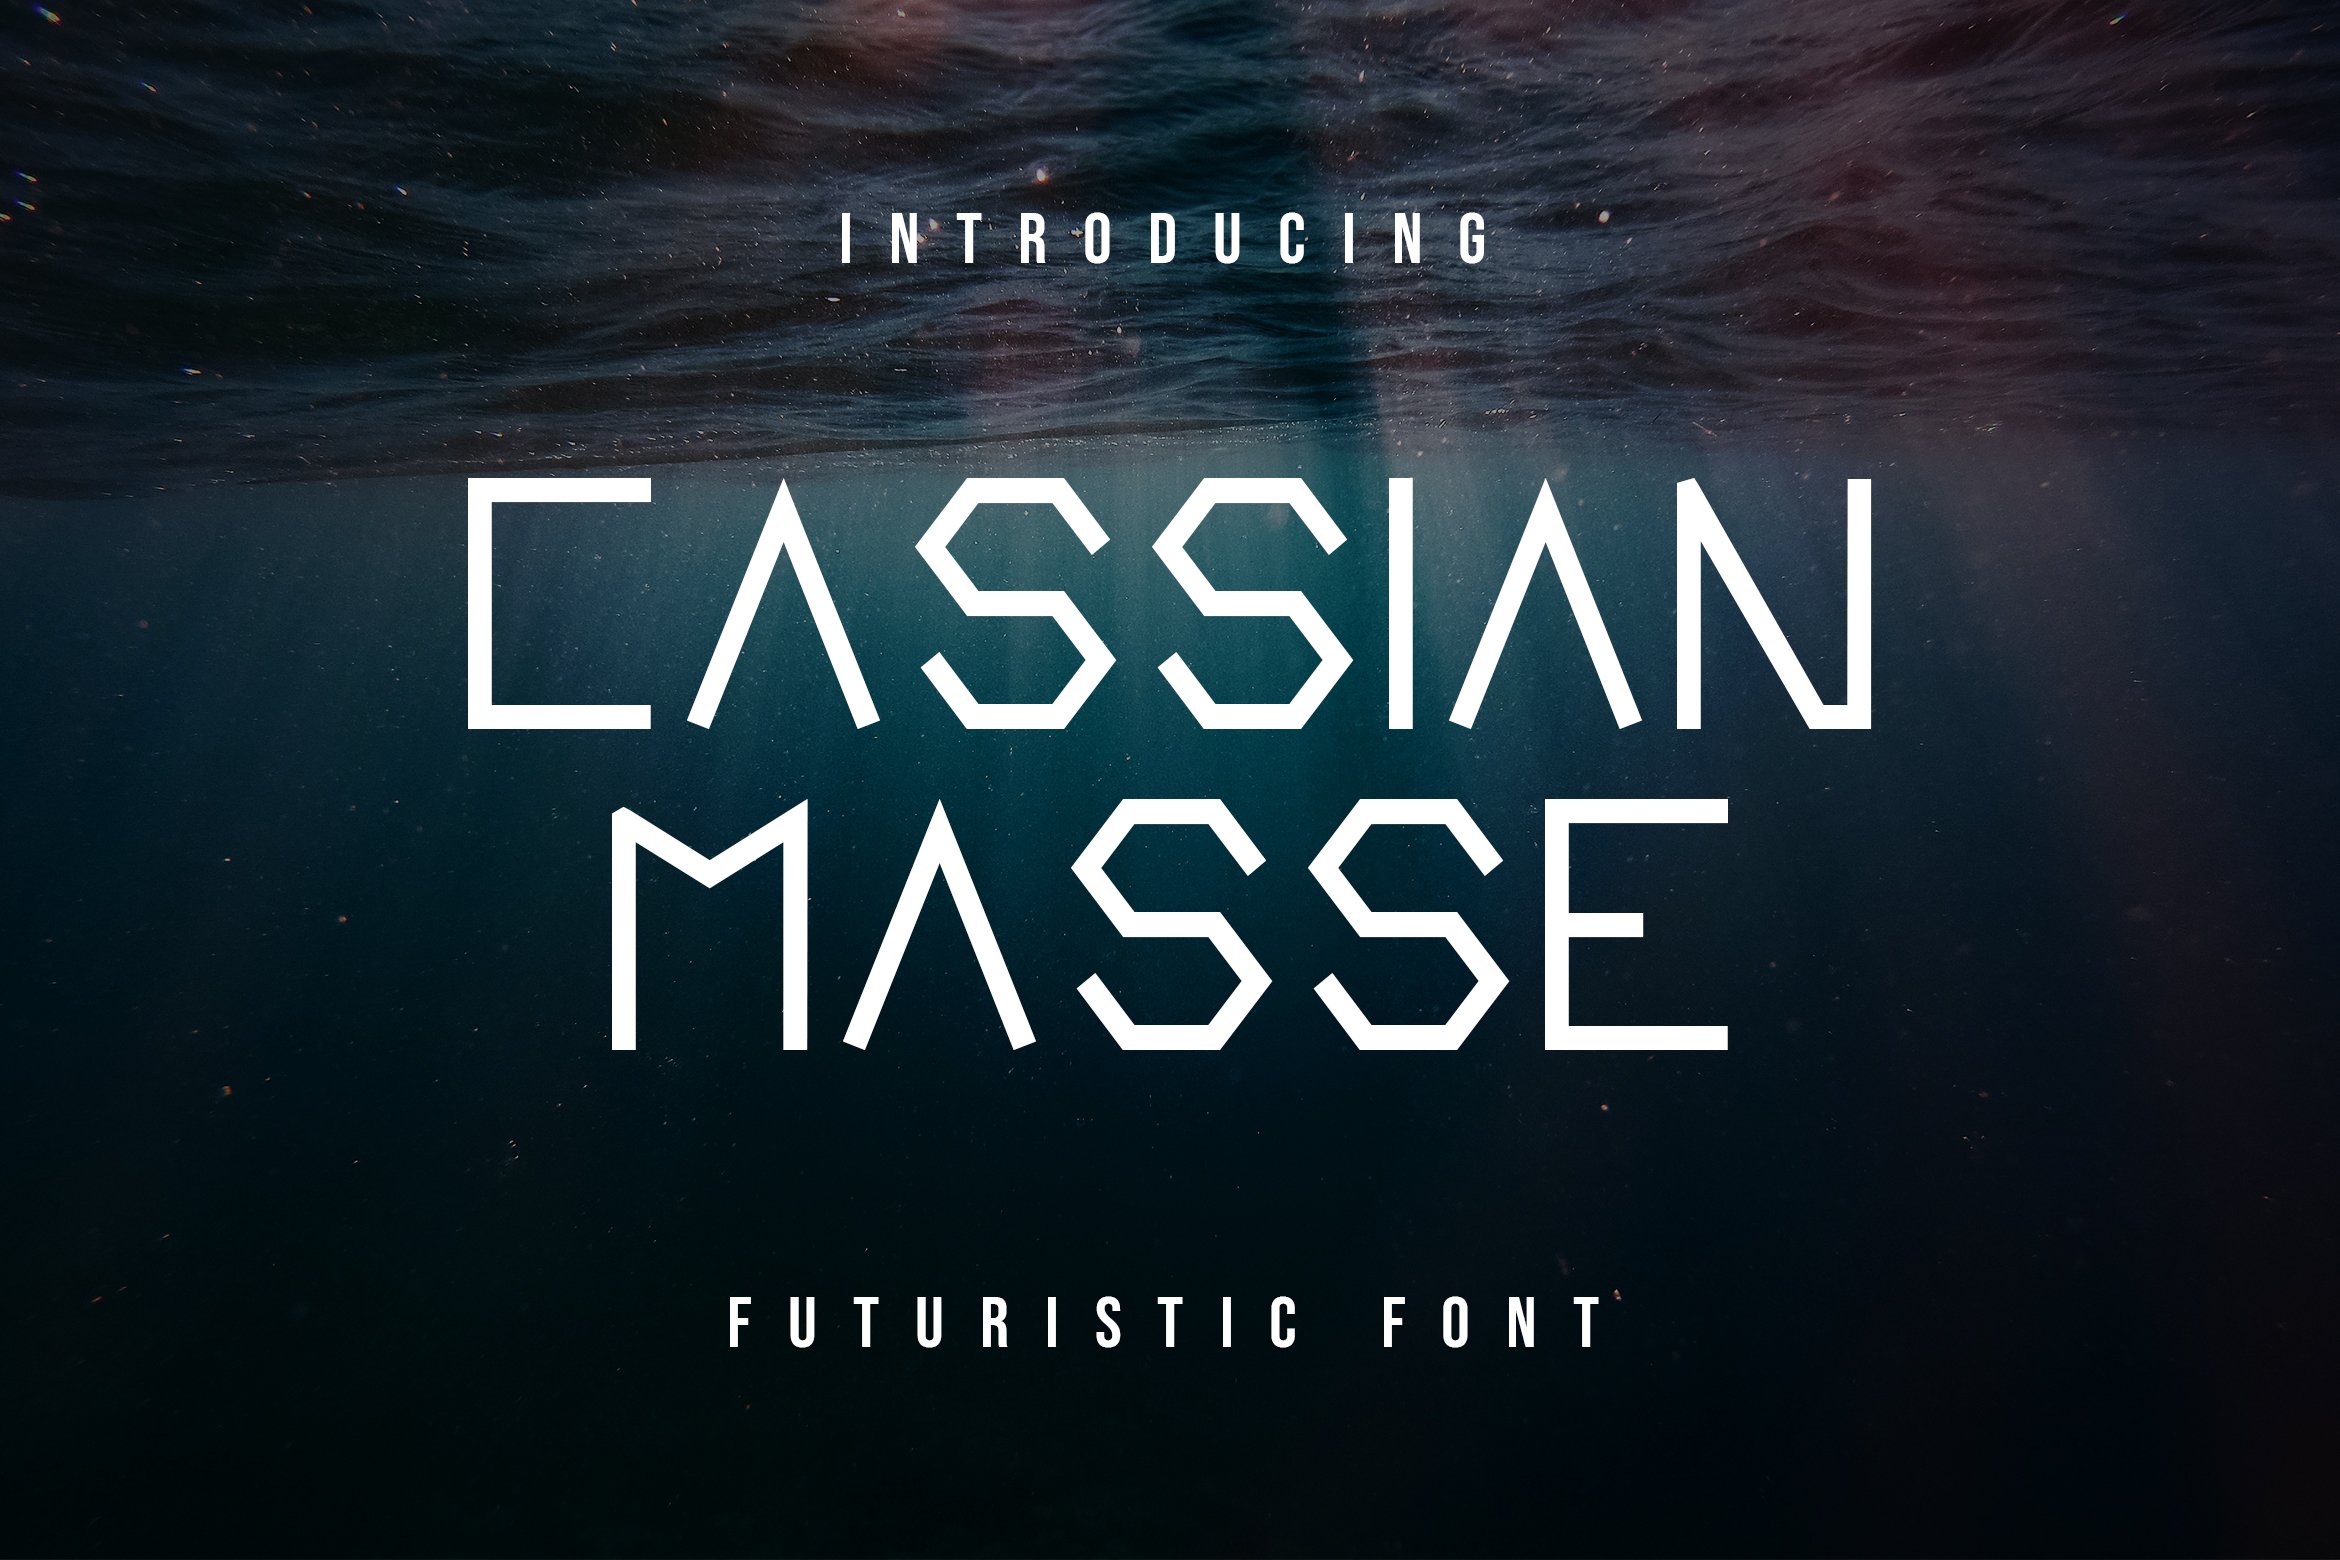 Cassian Masse cover image.